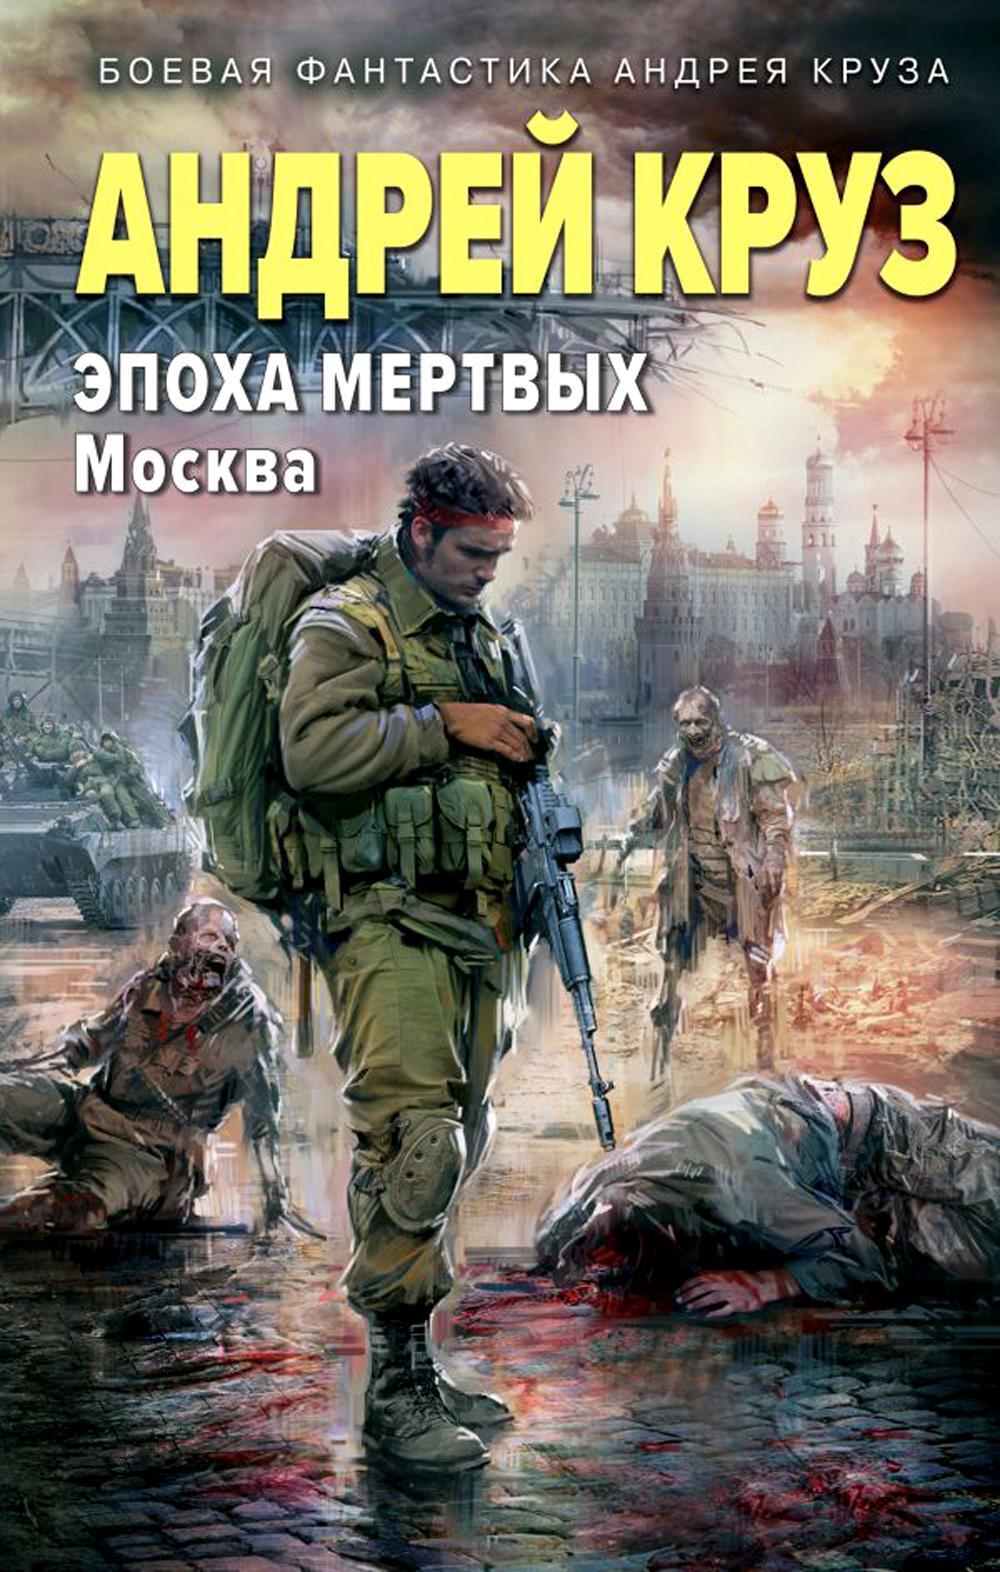 Эпоха Мертвых - 2. Москва